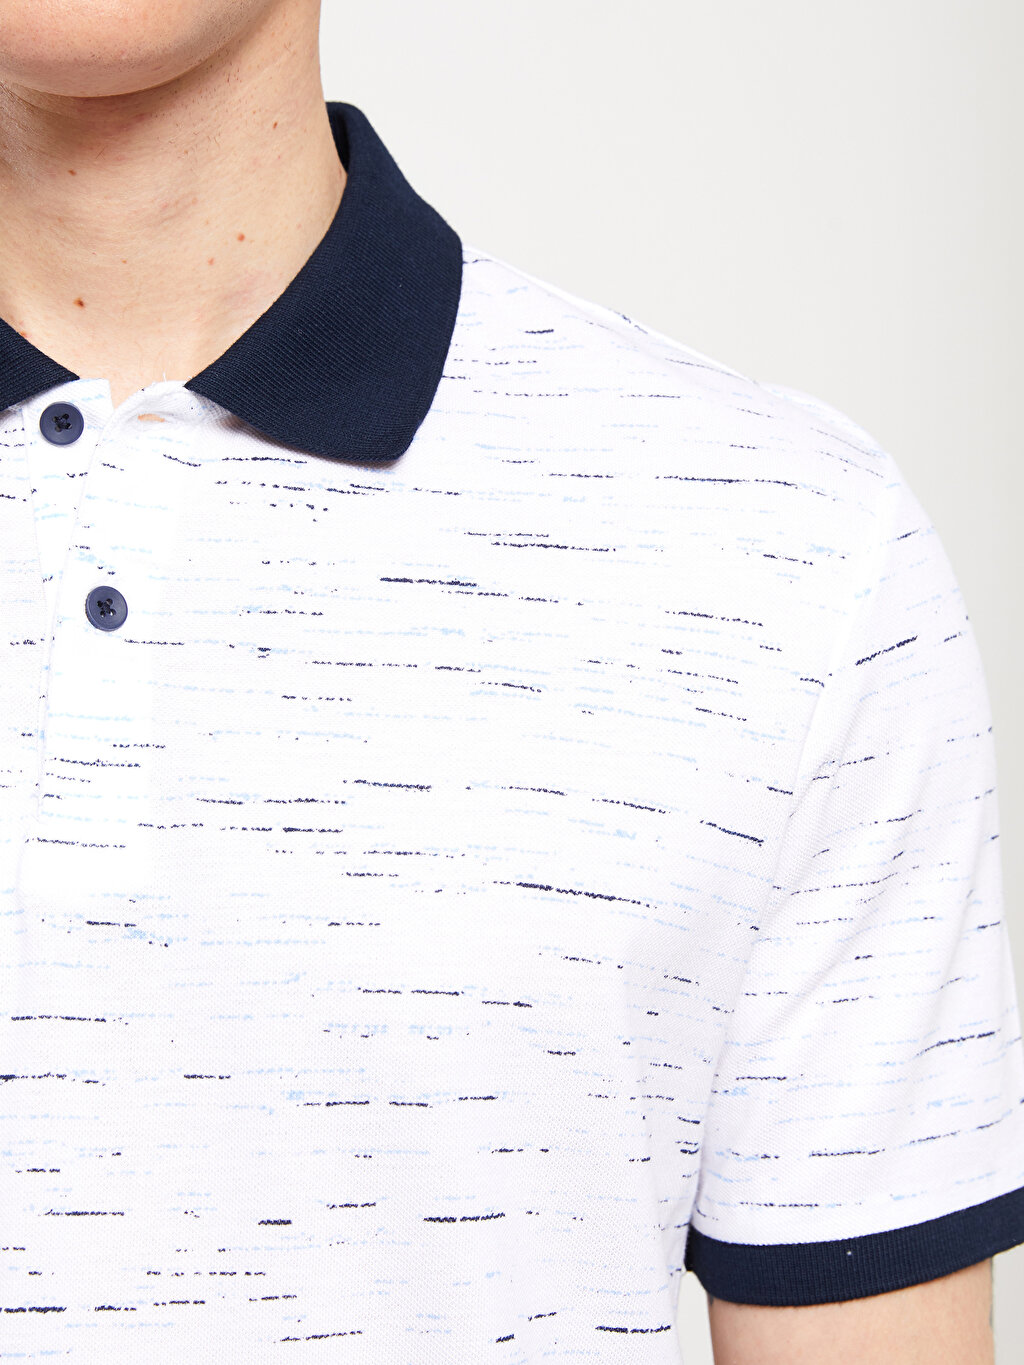 Polo Yaka t Shirt. Polo Neck. Катон мужская футболка с пуговицами. Поло котон новая коллекция. Футболка с погонами